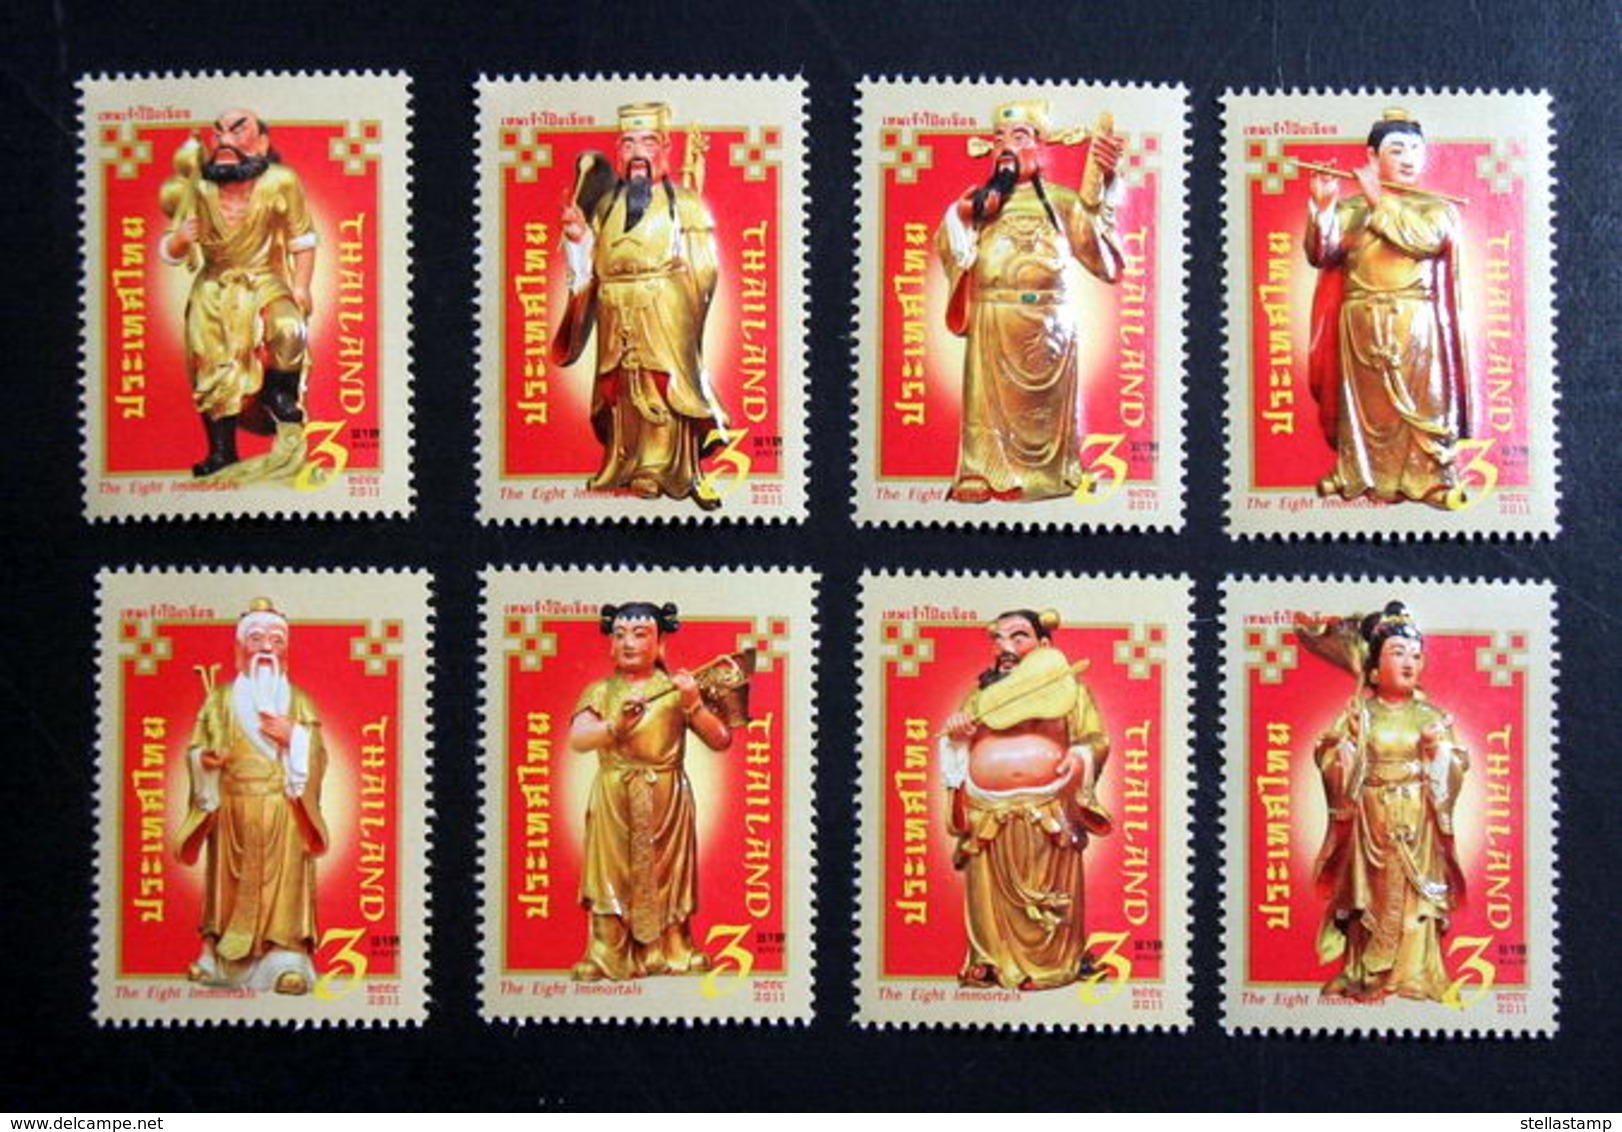 Thailand Stamp 2010 The Eight Immortals - Thailand